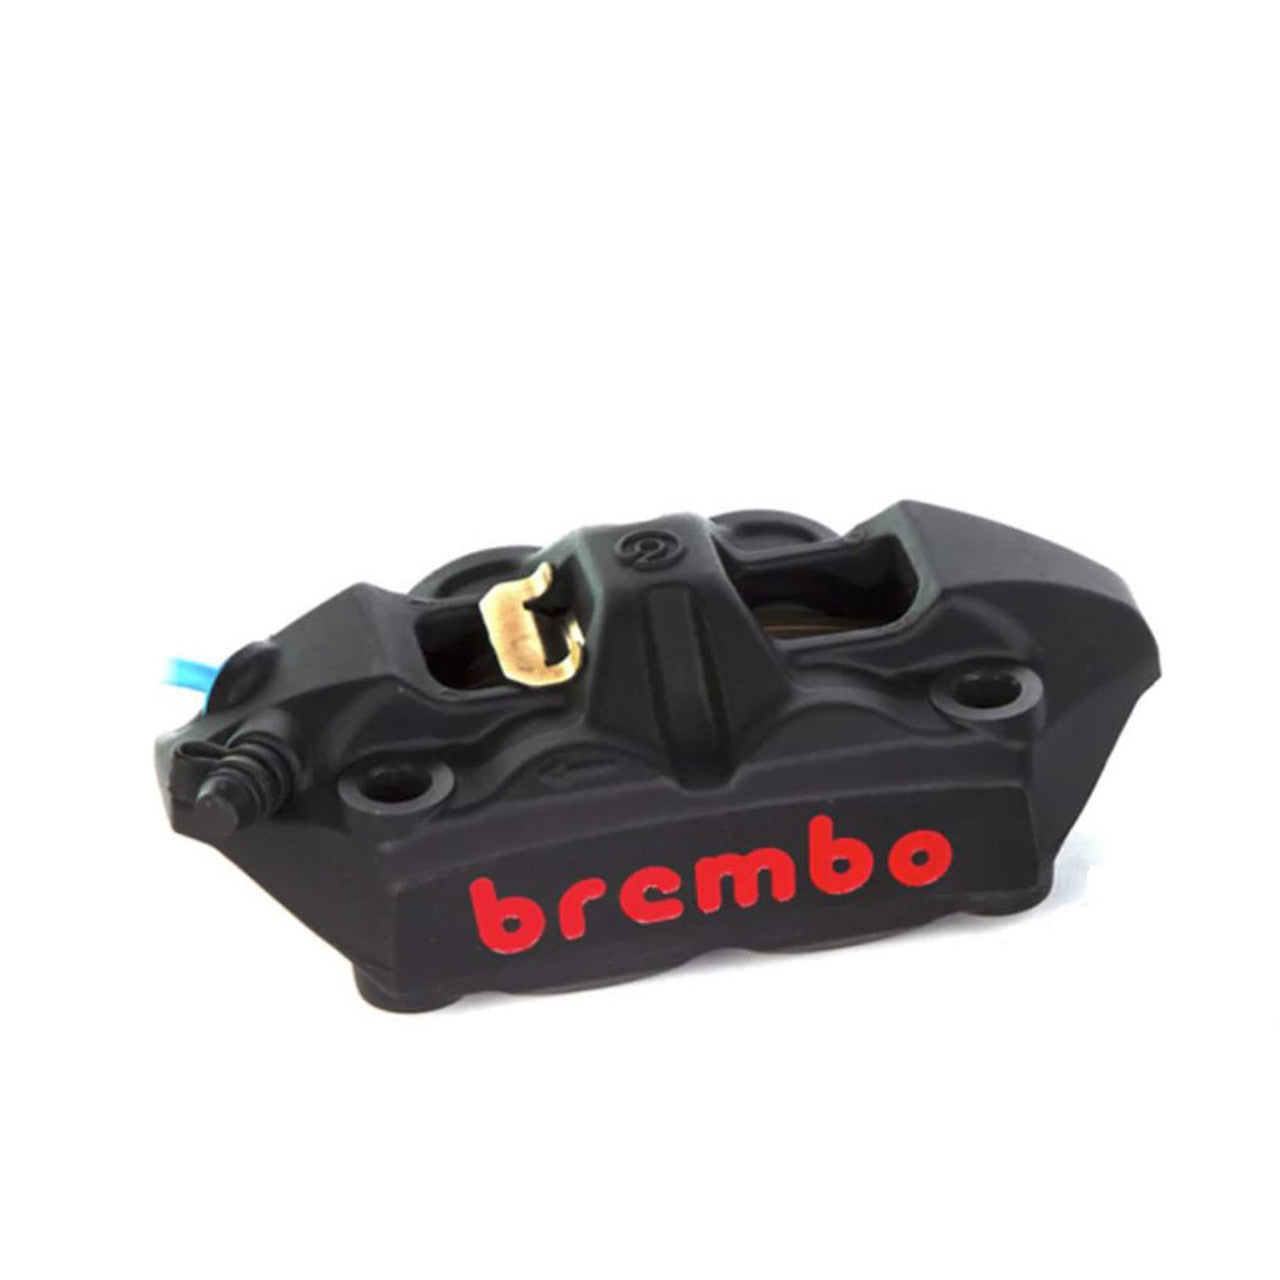 Brembo 108mm Radial Cast Monoblock 34/34 M4 Caliper